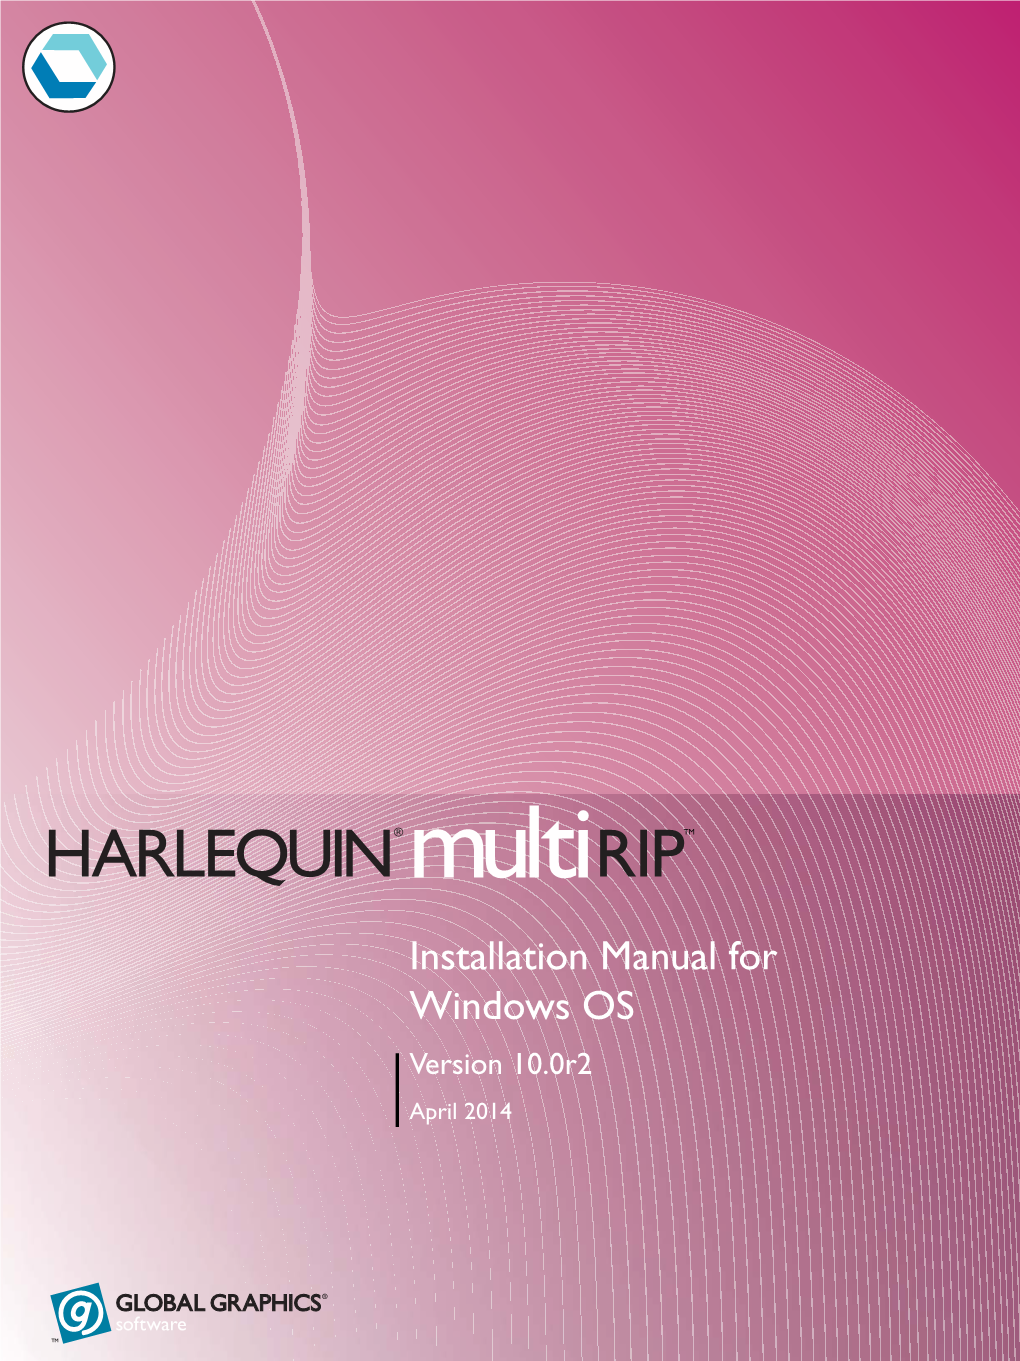 Harlequin Multirip Installation Guide